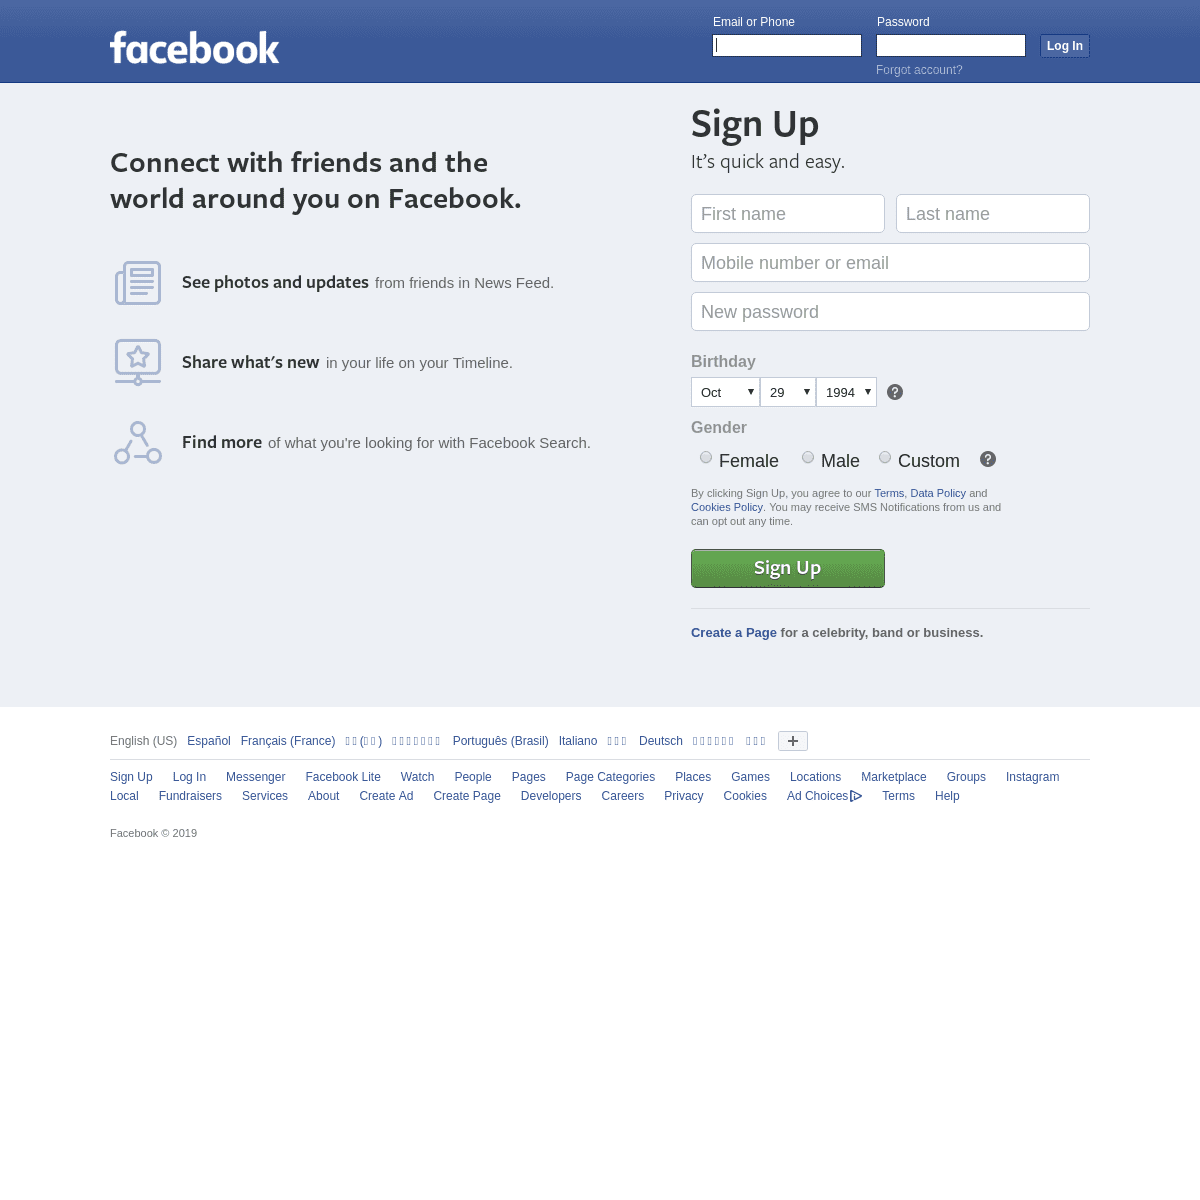 A complete backup of www.facebook.com